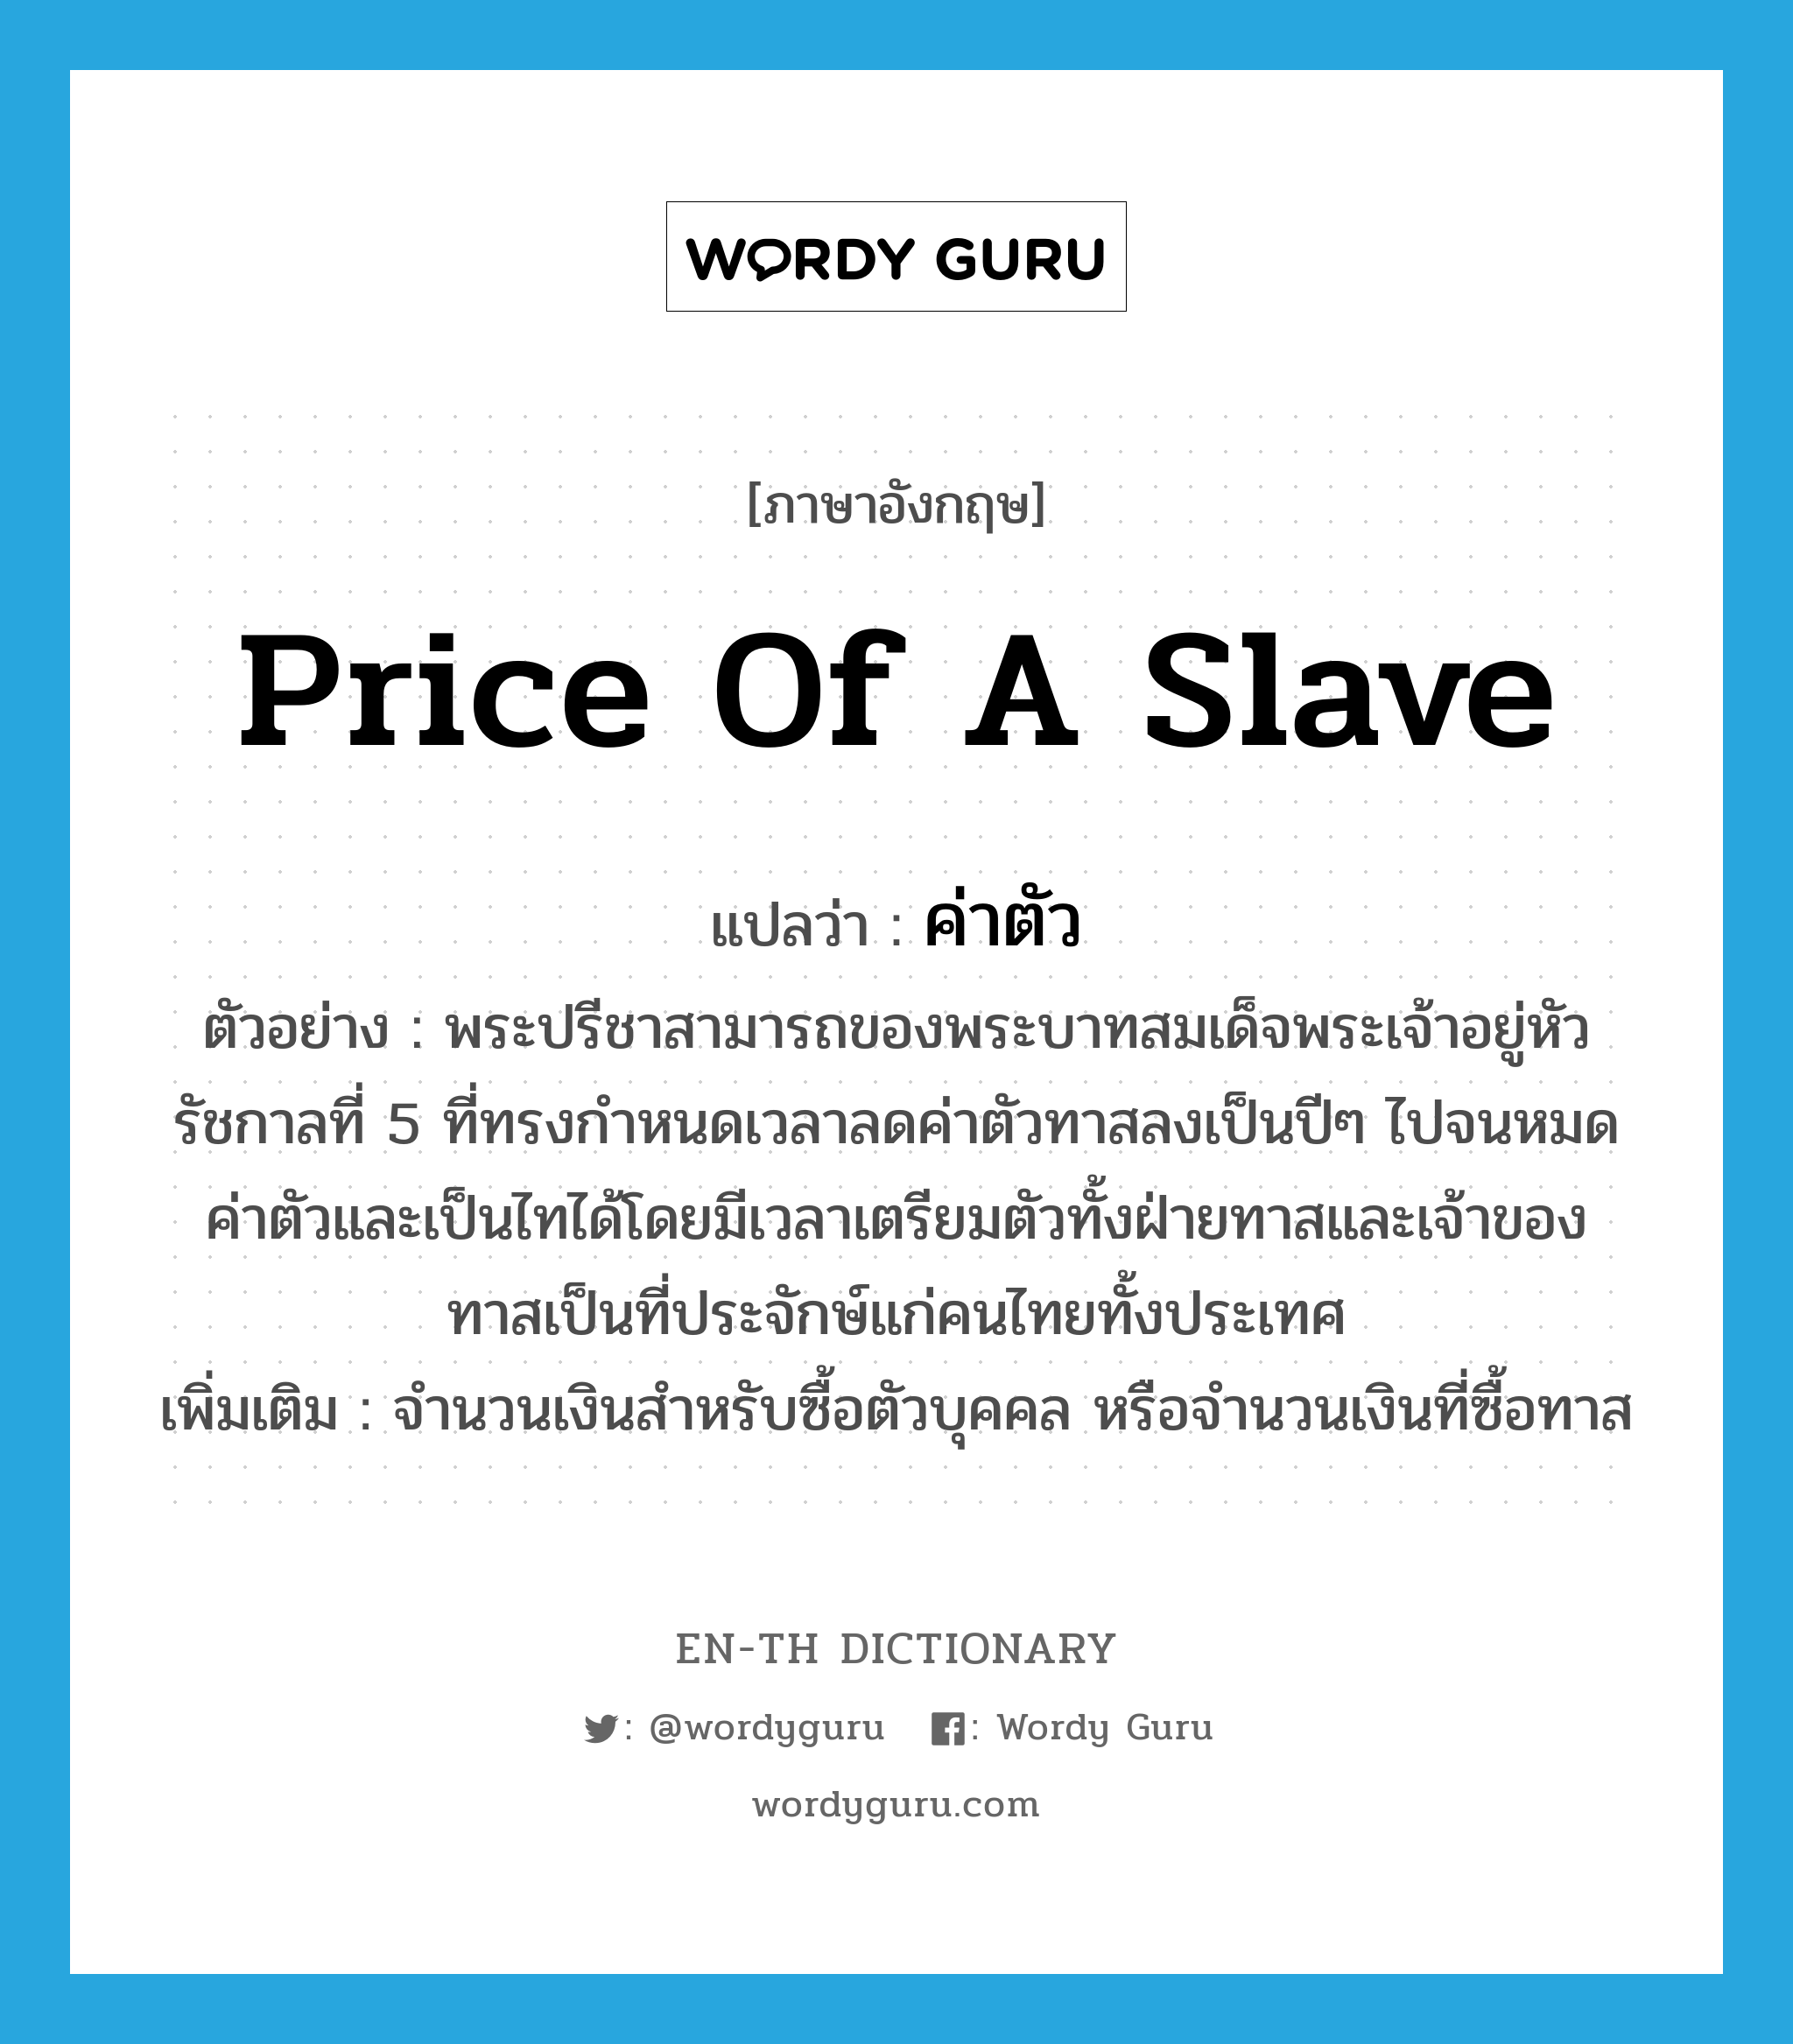 price of a slave แปลว่า?, คำศัพท์ภาษาอังกฤษ price of a slave แปลว่า ค่าตัว ประเภท N ตัวอย่าง พระปรีชาสามารถของพระบาทสมเด็จพระเจ้าอยู่หัวรัชกาลที่ 5 ที่ทรงกำหนดเวลาลดค่าตัวทาสลงเป็นปีๆ ไปจนหมดค่าตัวและเป็นไทได้โดยมีเวลาเตรียมตัวทั้งฝ่ายทาสและเจ้าของทาสเป็นที่ประจักษ์แก่คนไทยทั้งประเทศ เพิ่มเติม จำนวนเงินสำหรับซื้อตัวบุคคล หรือจำนวนเงินที่ซื้อทาส หมวด N